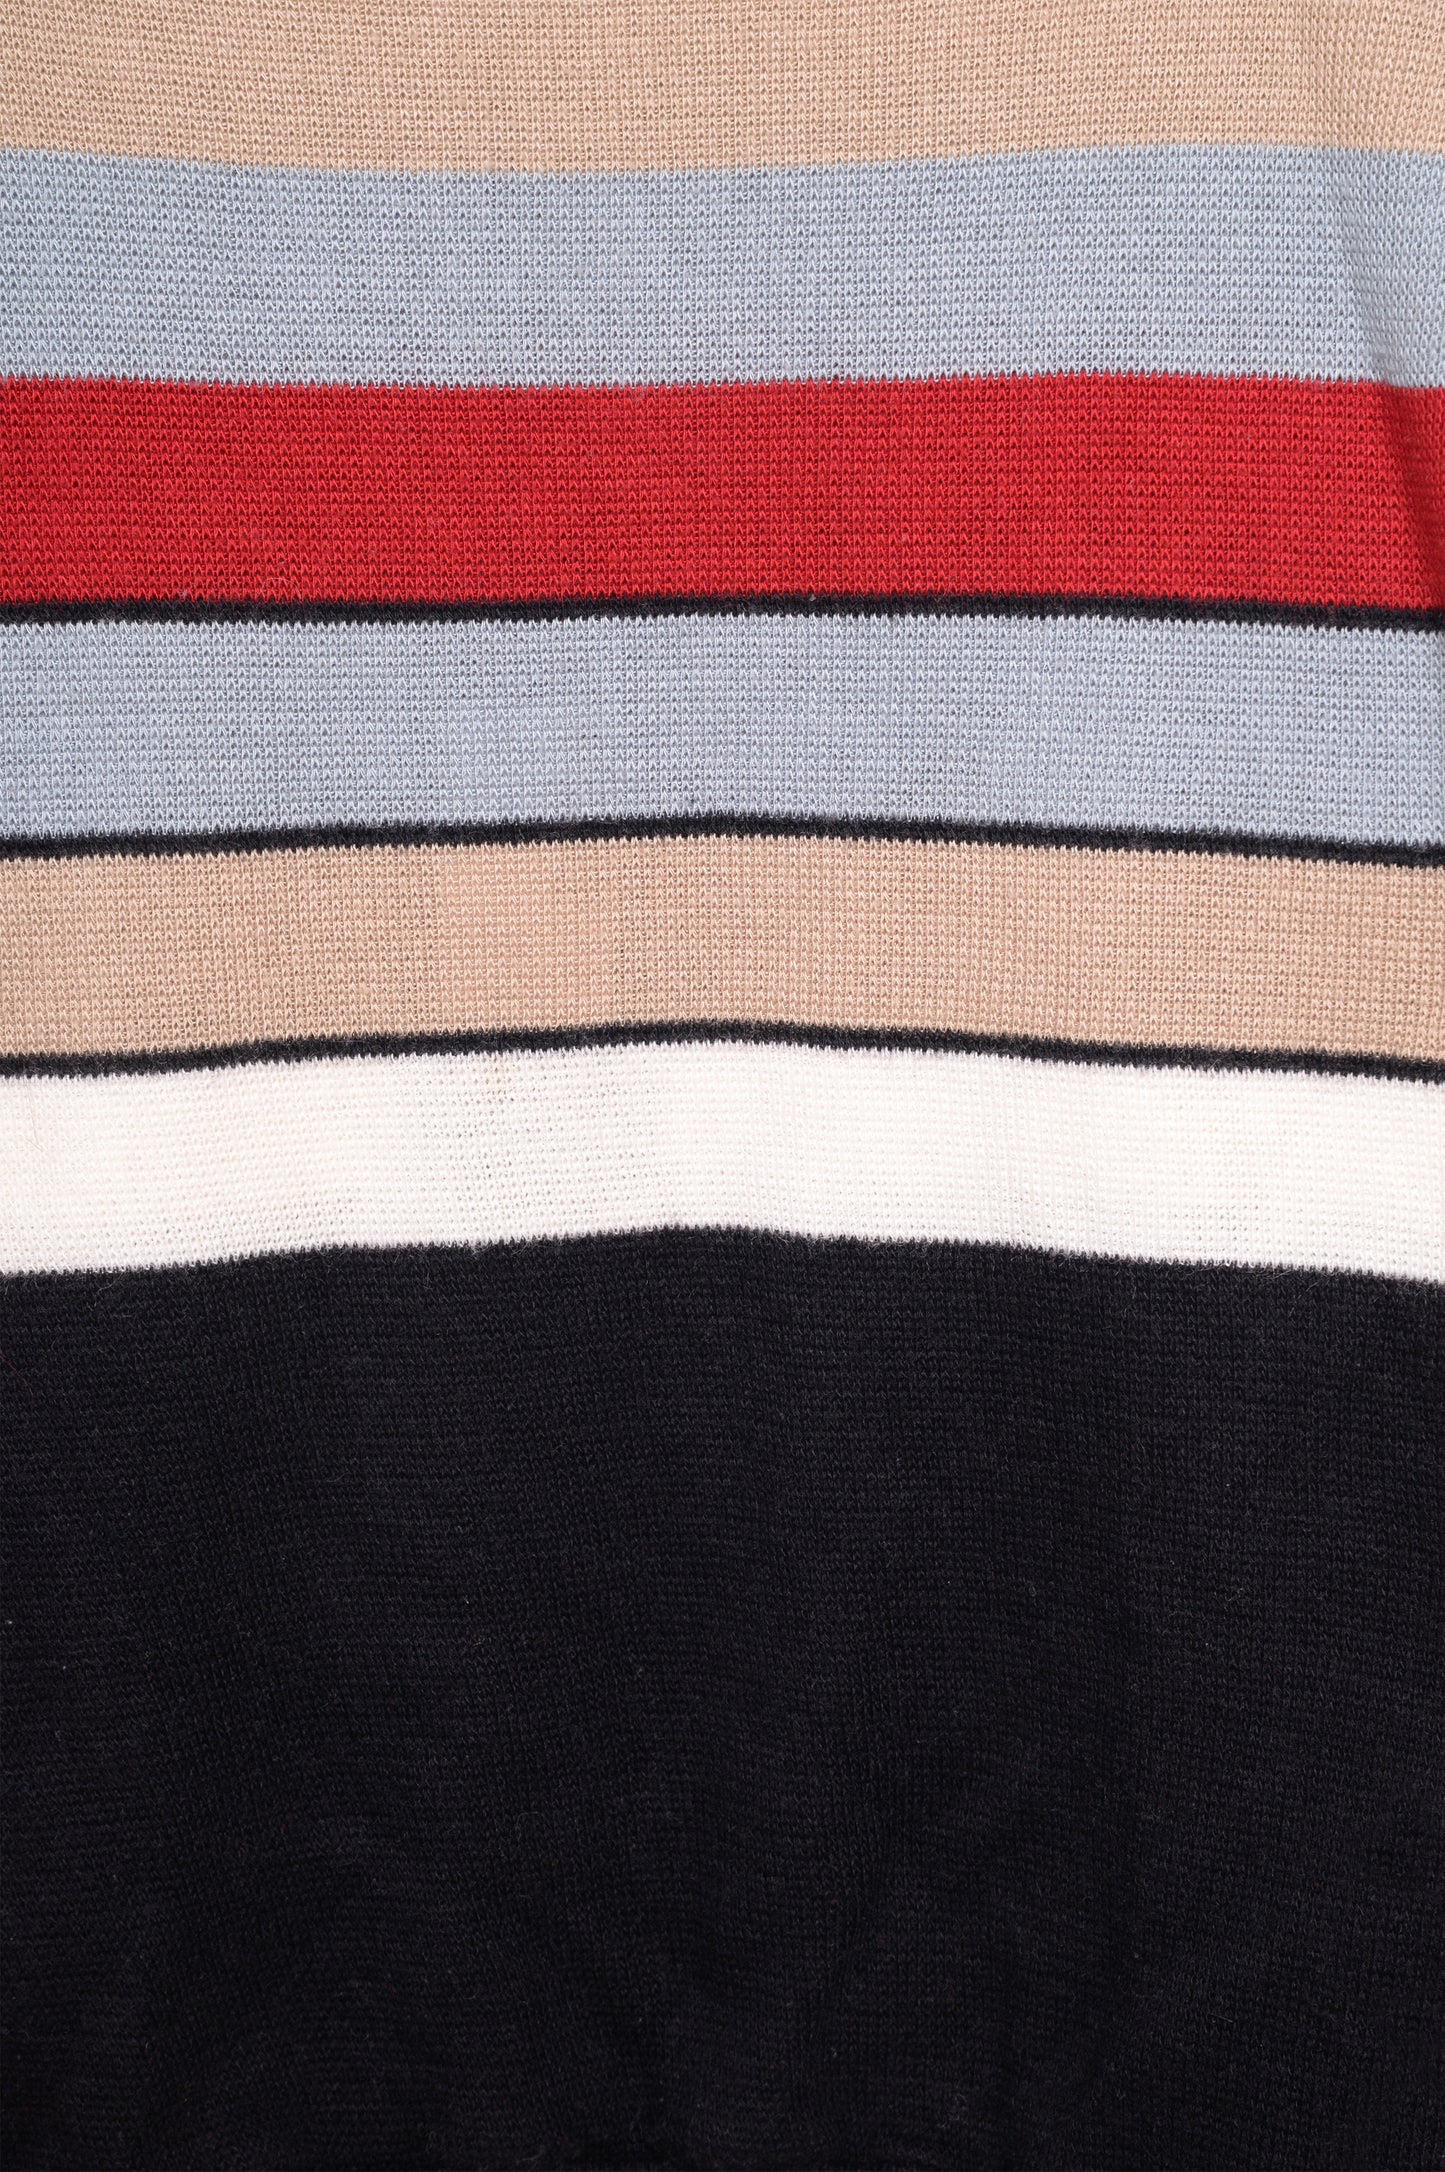 Wide Neck Striped Sweater